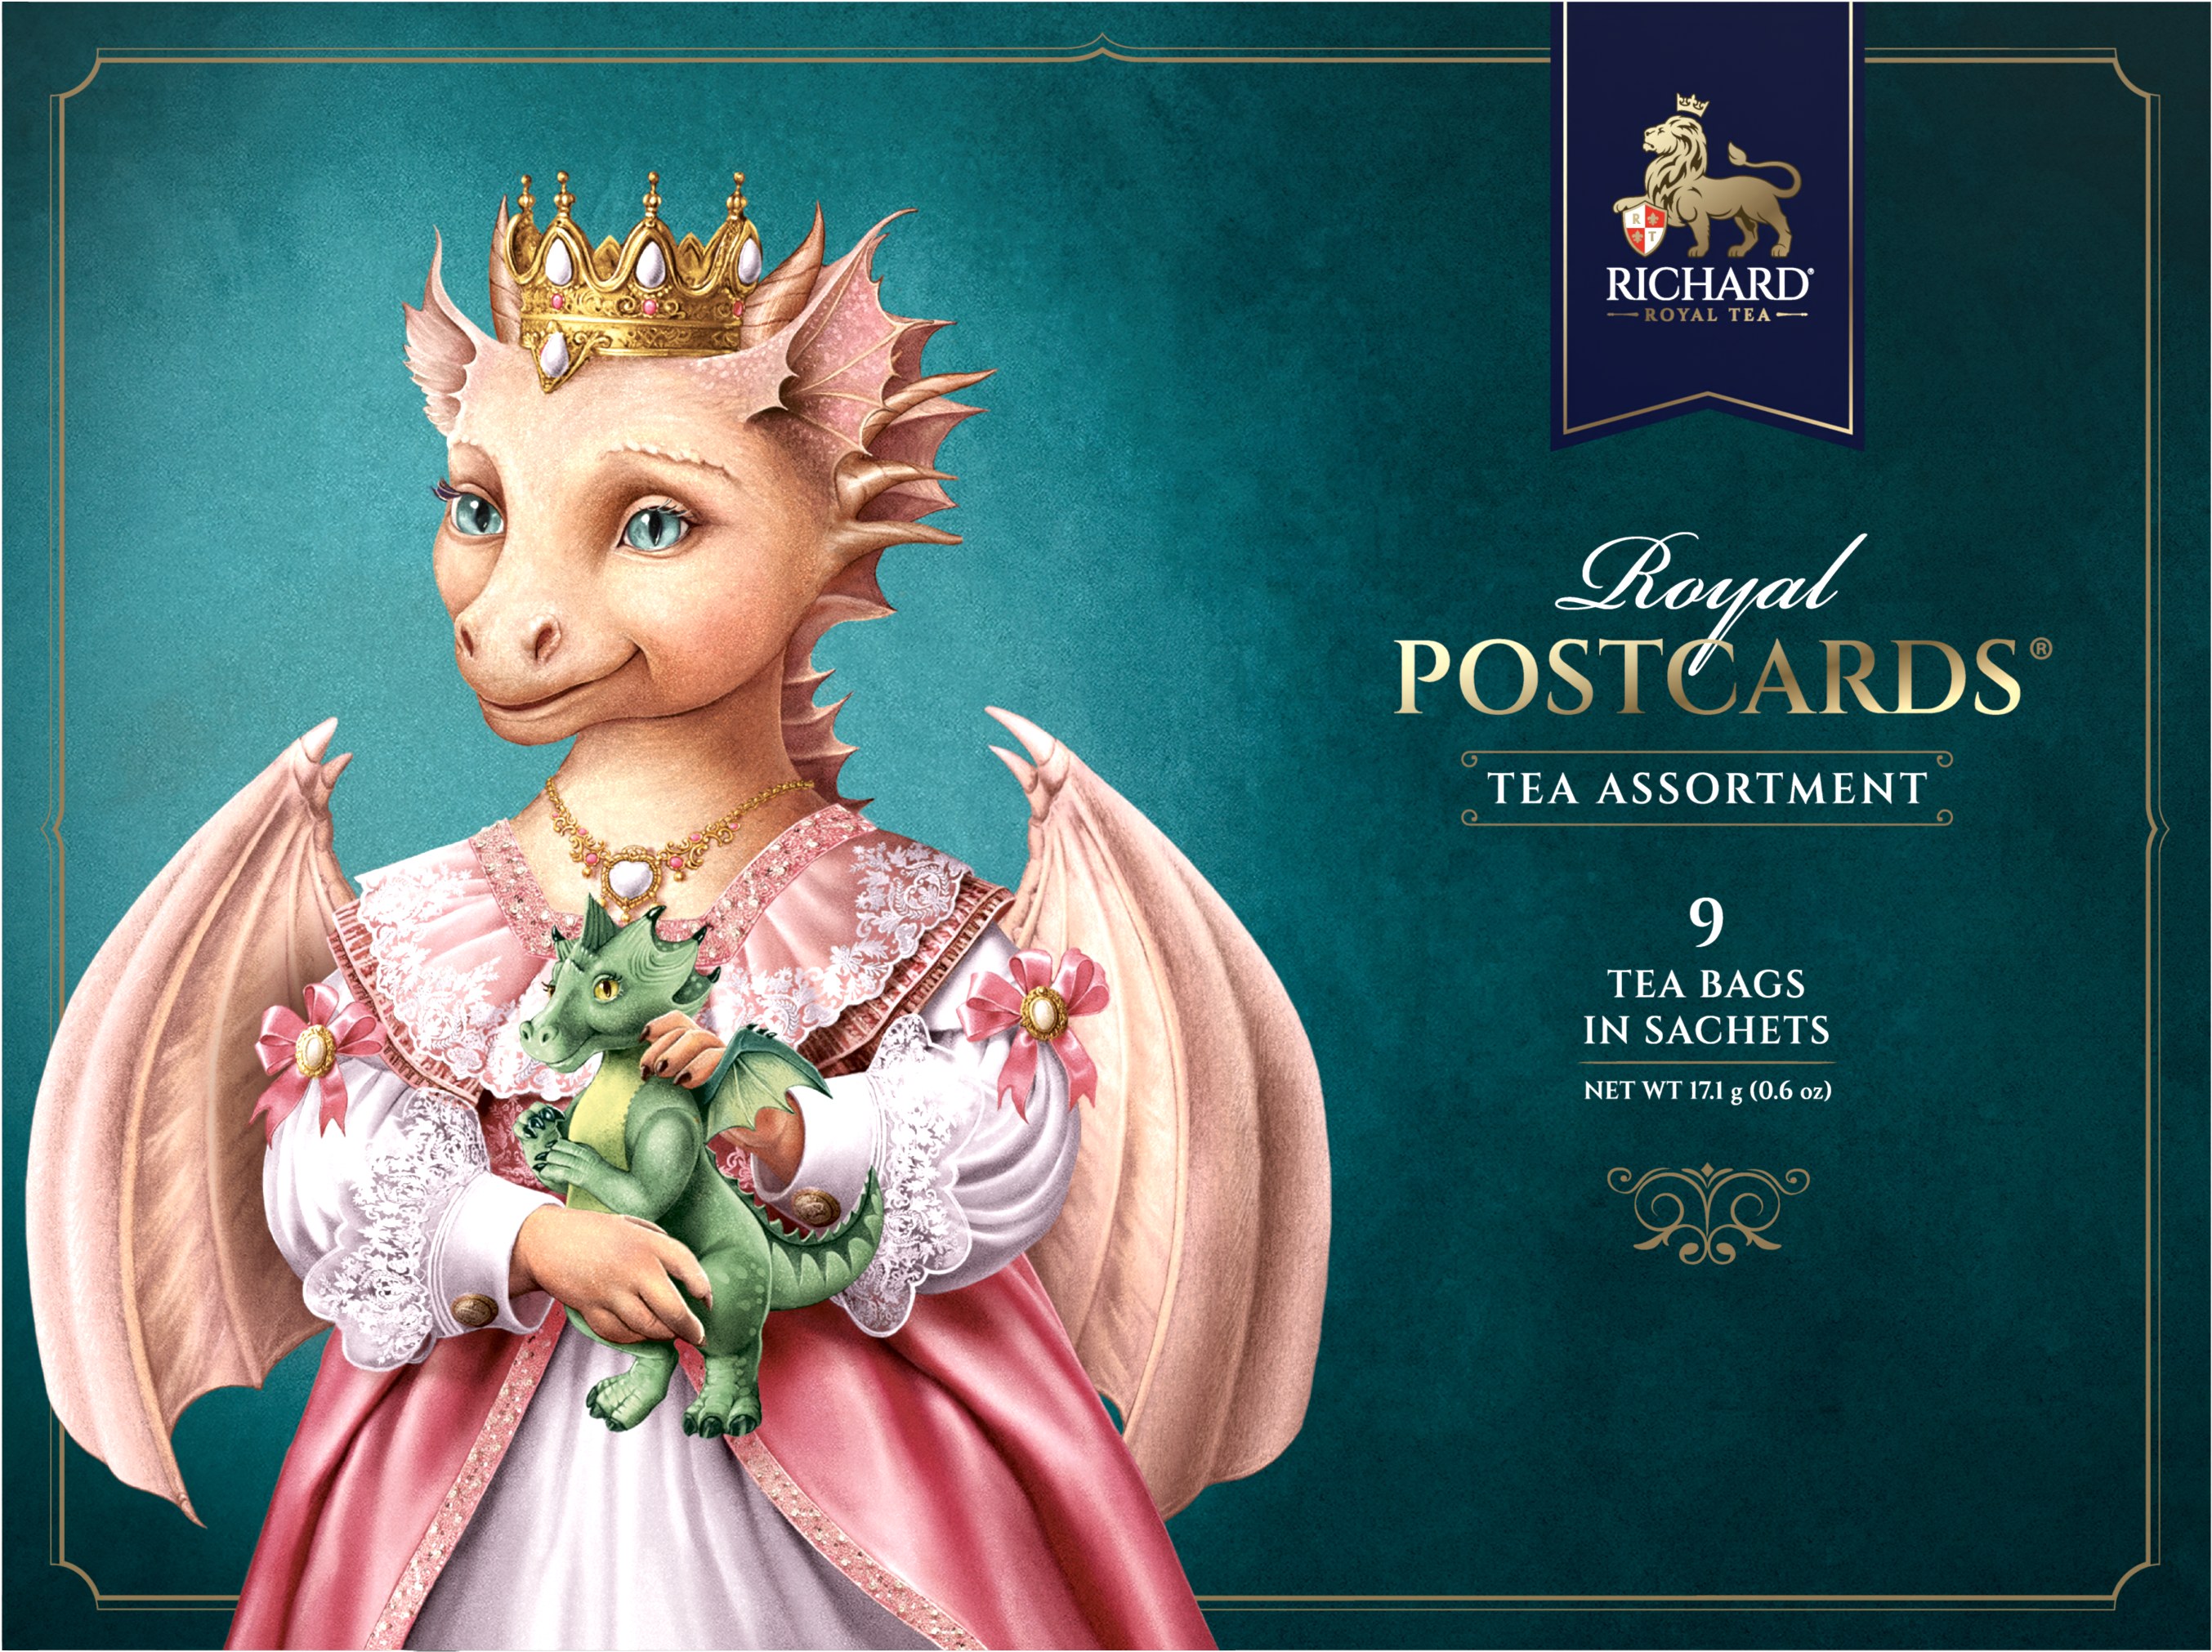 Royal Postcards Tea Assortment, Year of the Royal Dragon Princess, assorted tea - 9 sachets